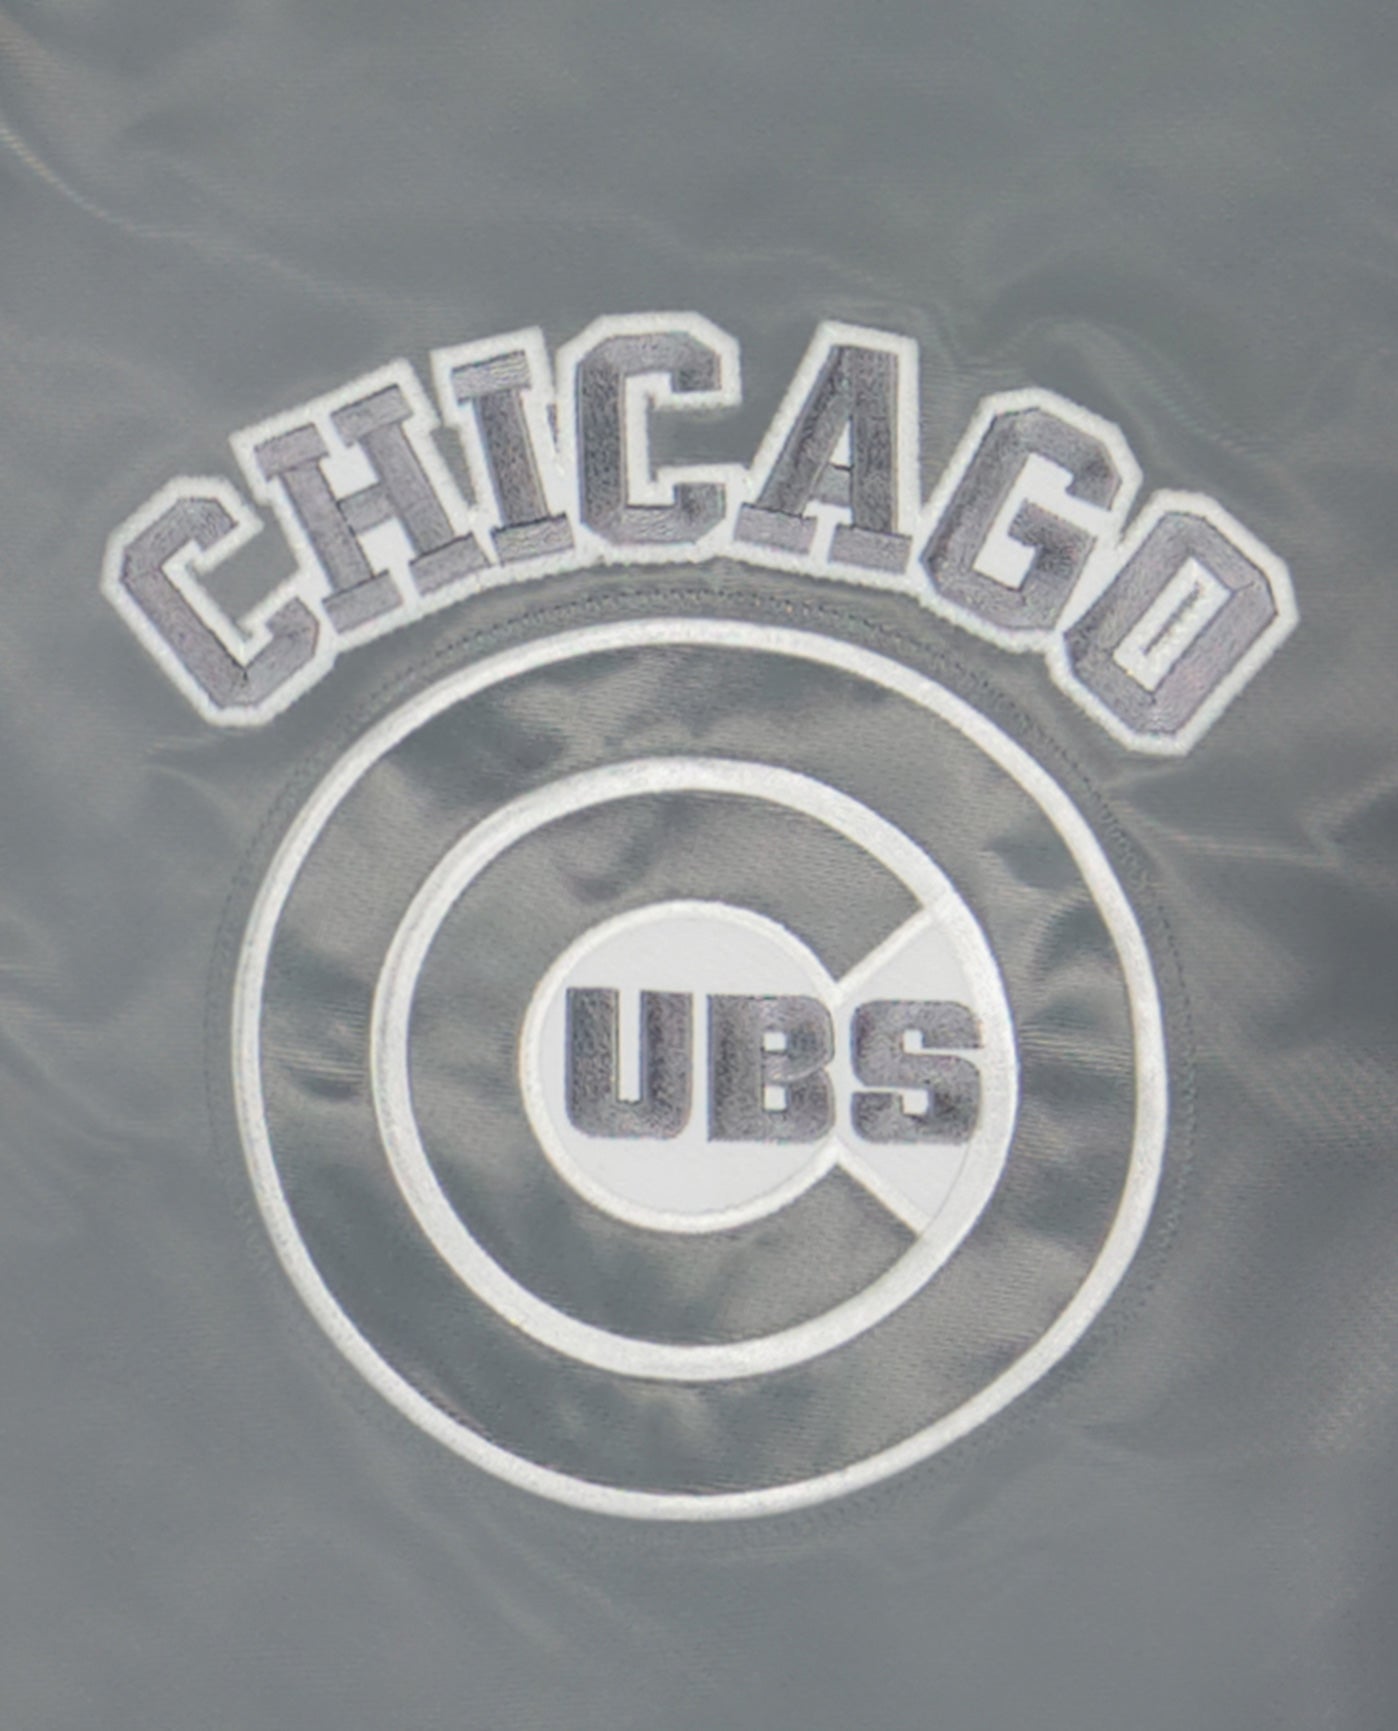 STARTER Mens Chicago Cubs Satin Varsity Jacket, Grey, Large (Regular)